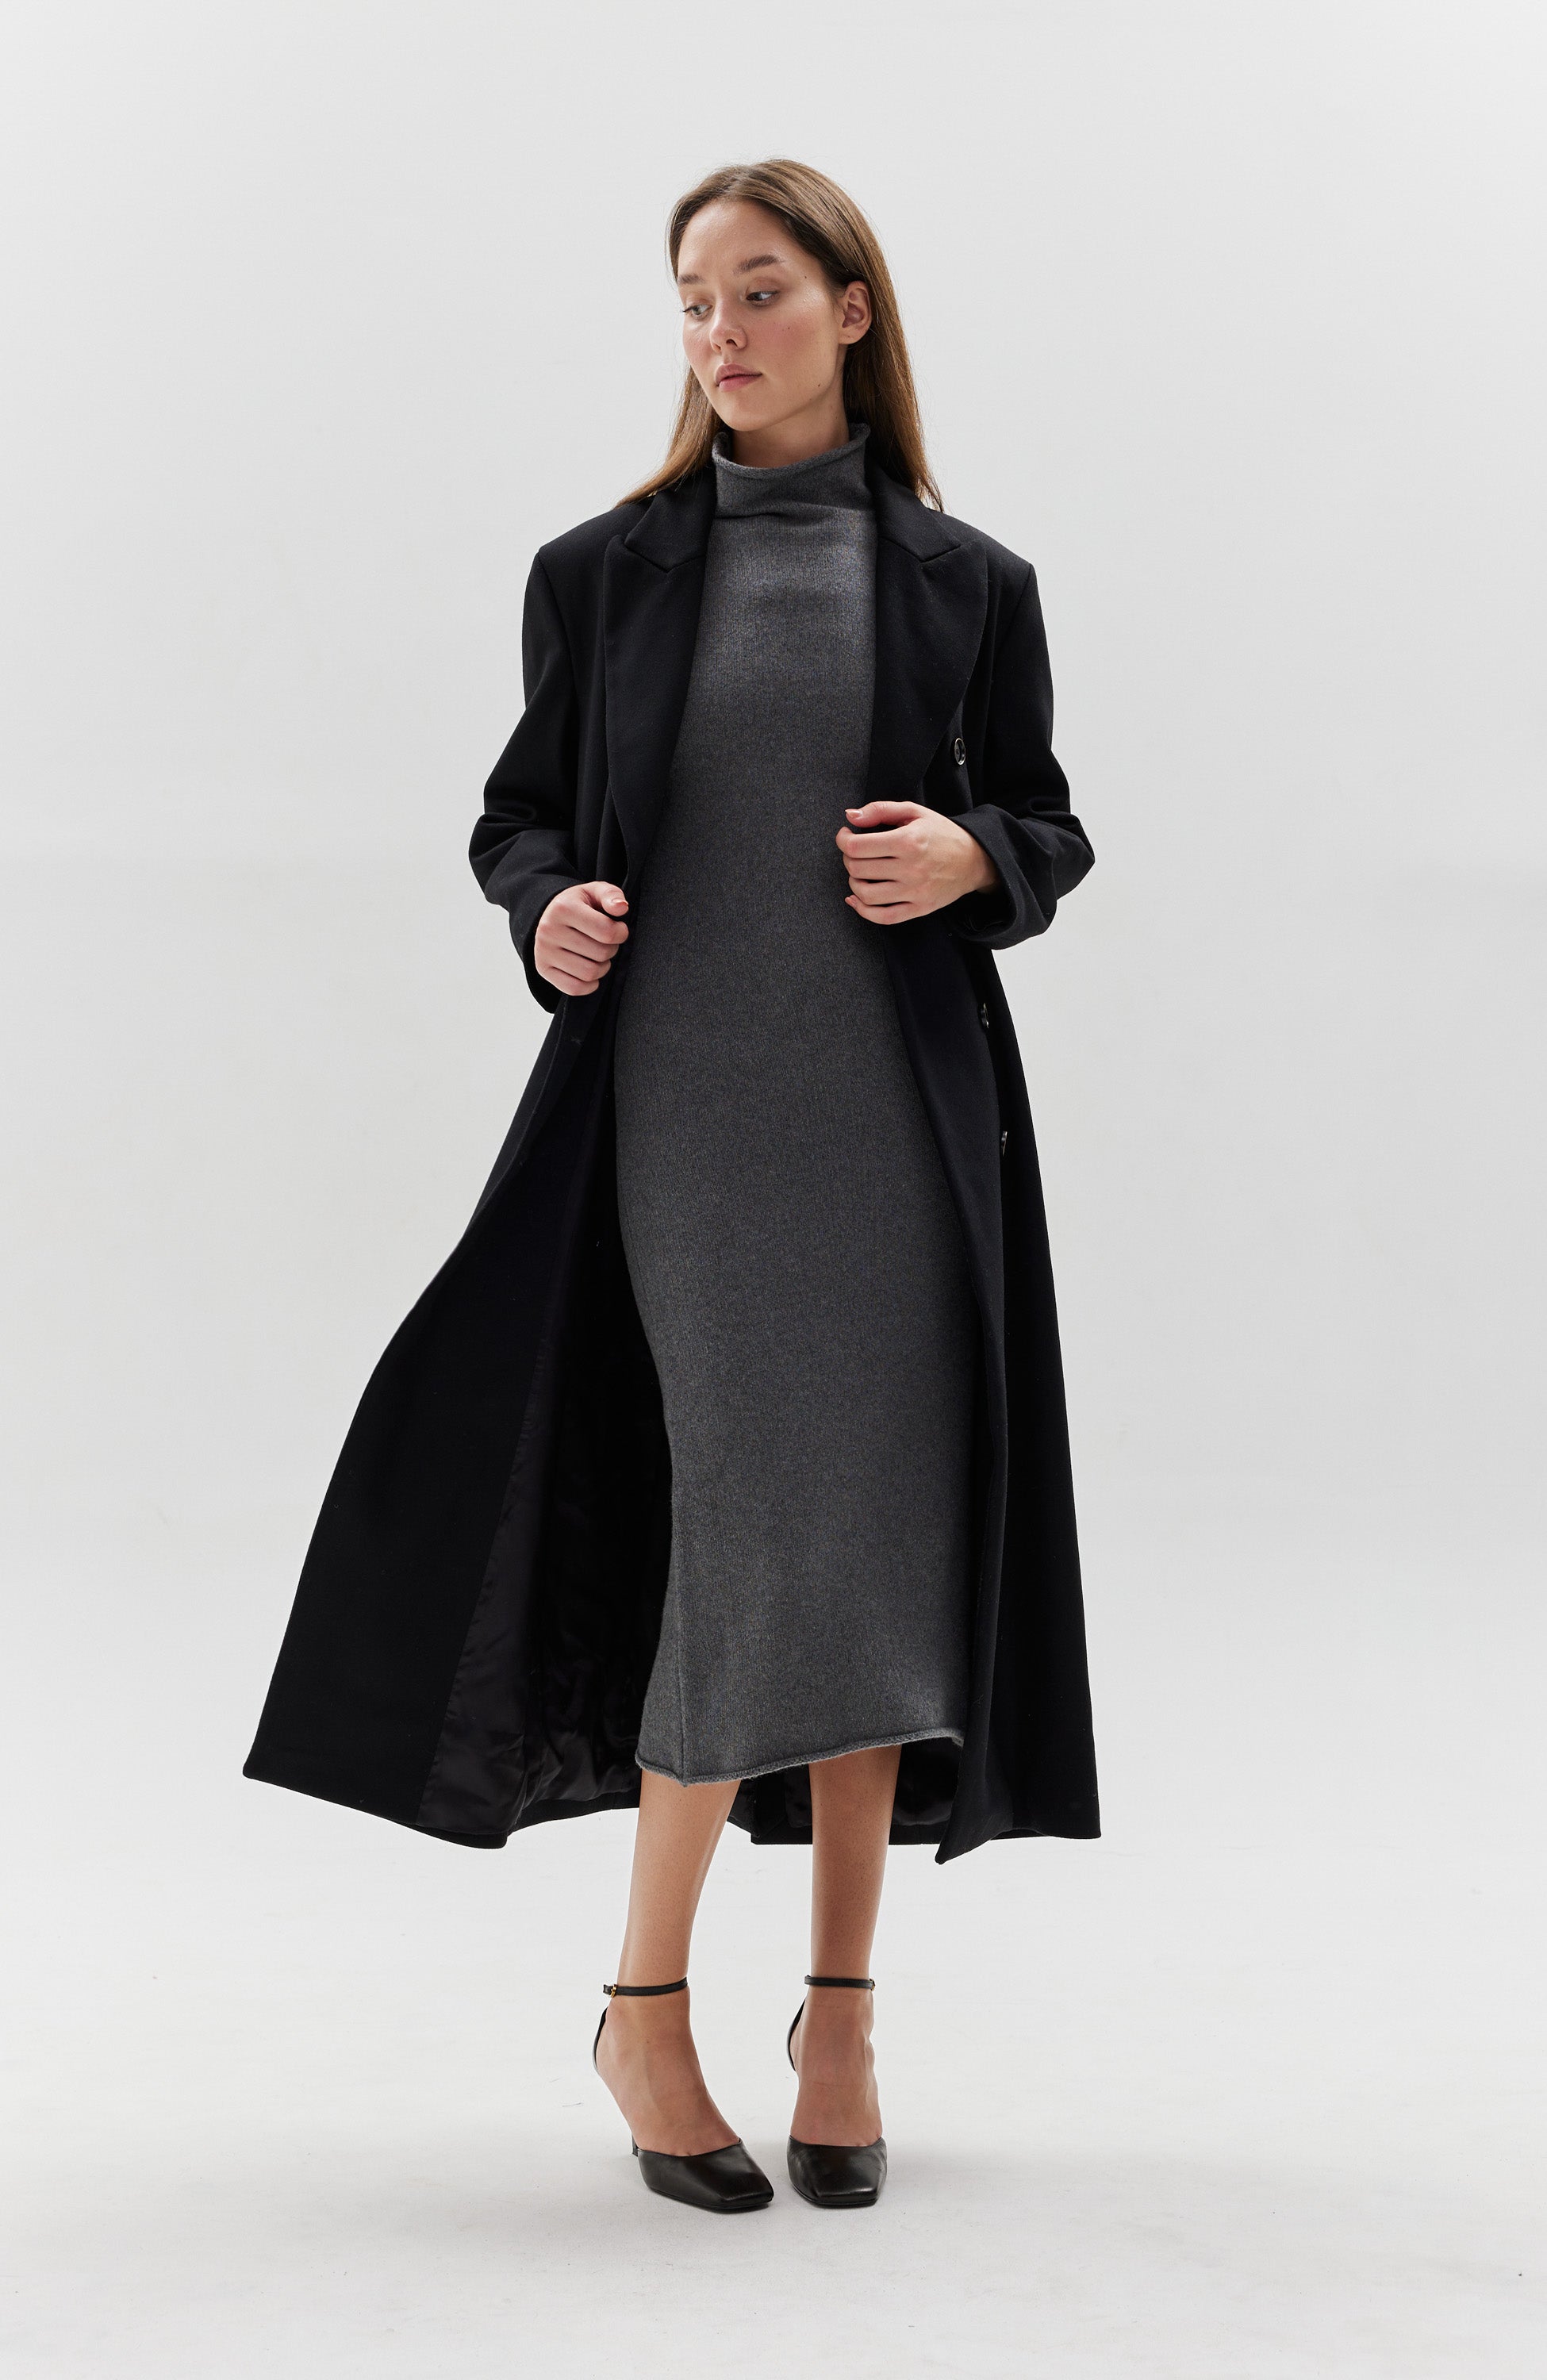 Erika Cavallini double breasted wool coat